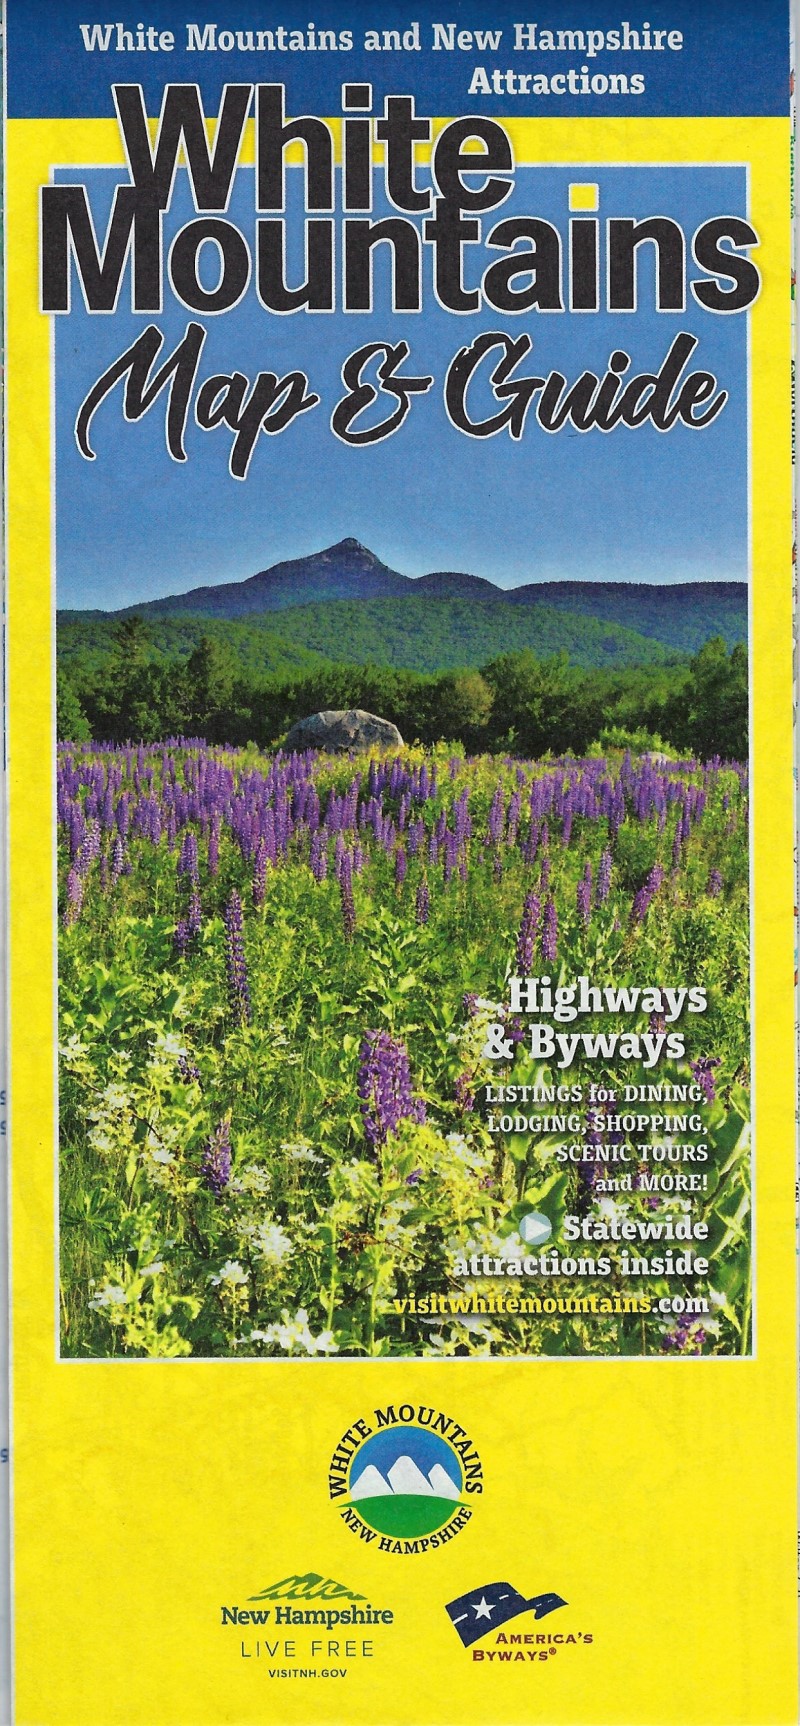 White Mountains Map & Guide brochure thumbnail